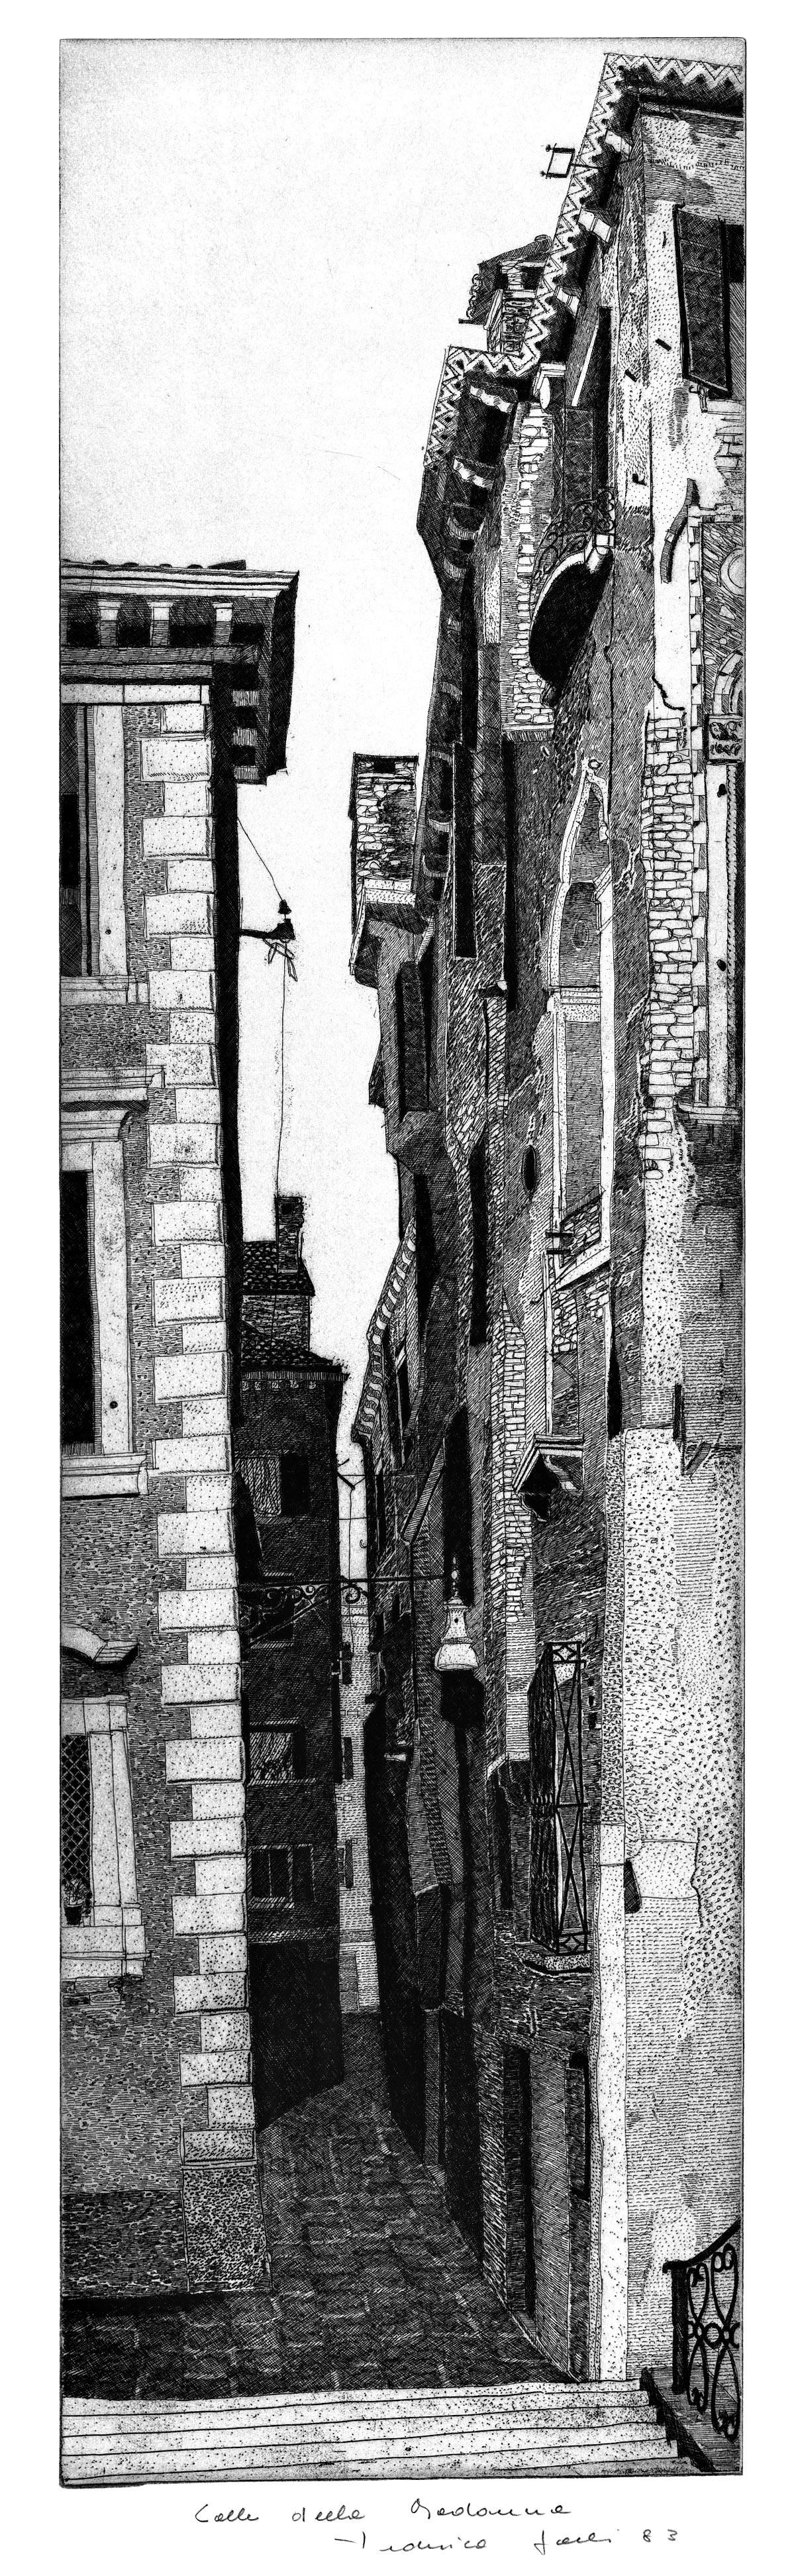 Federica Galli Landscape Print - Typical venice architecture landscape  by master italian etcher